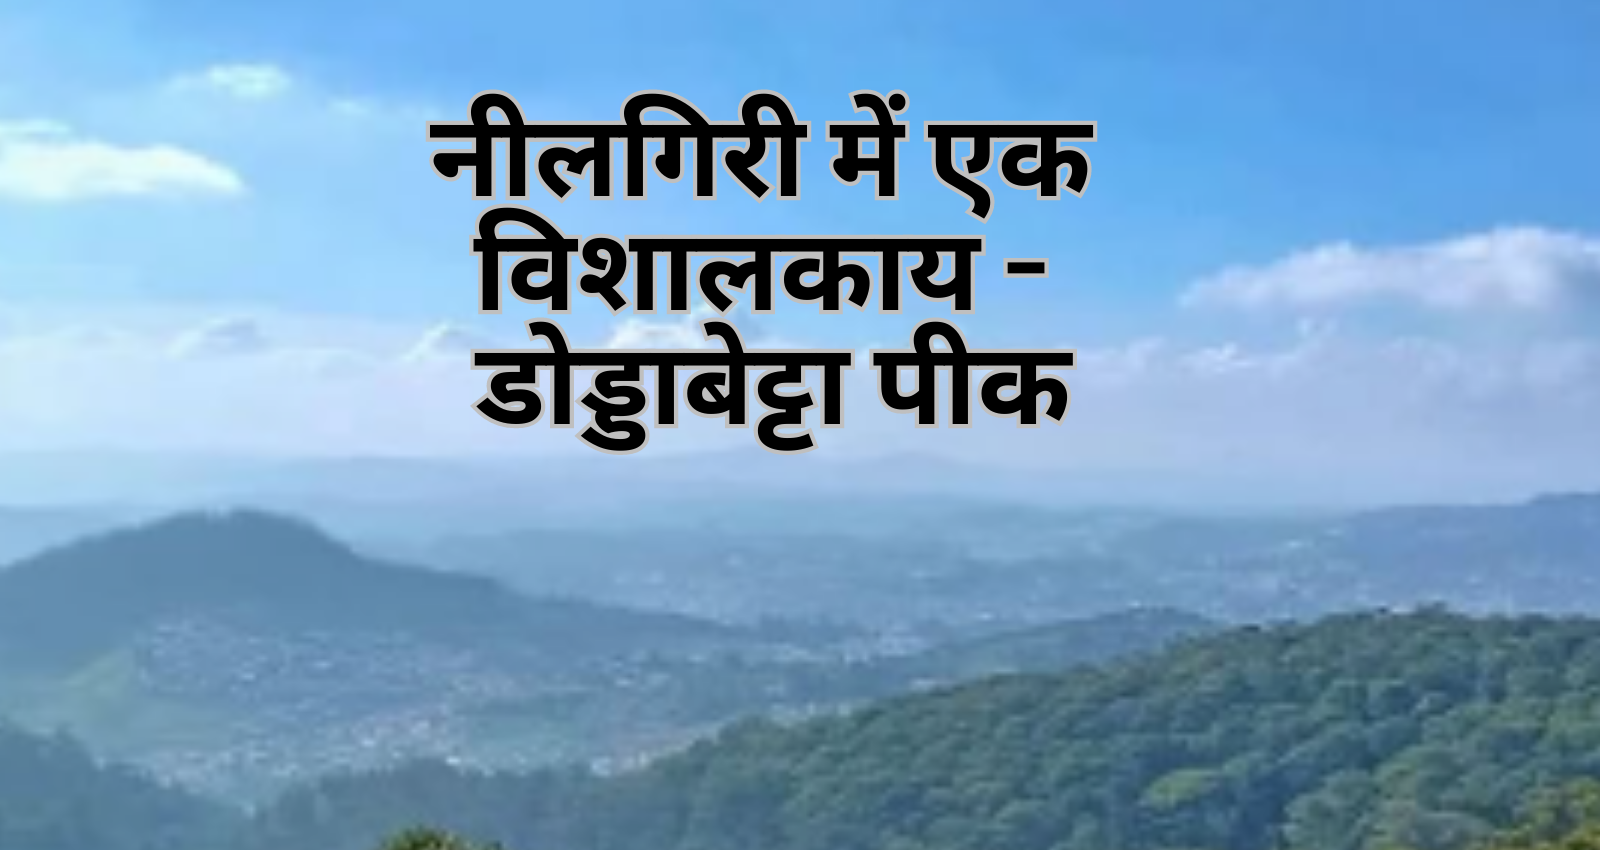 The Doddabetta Peak in hindi